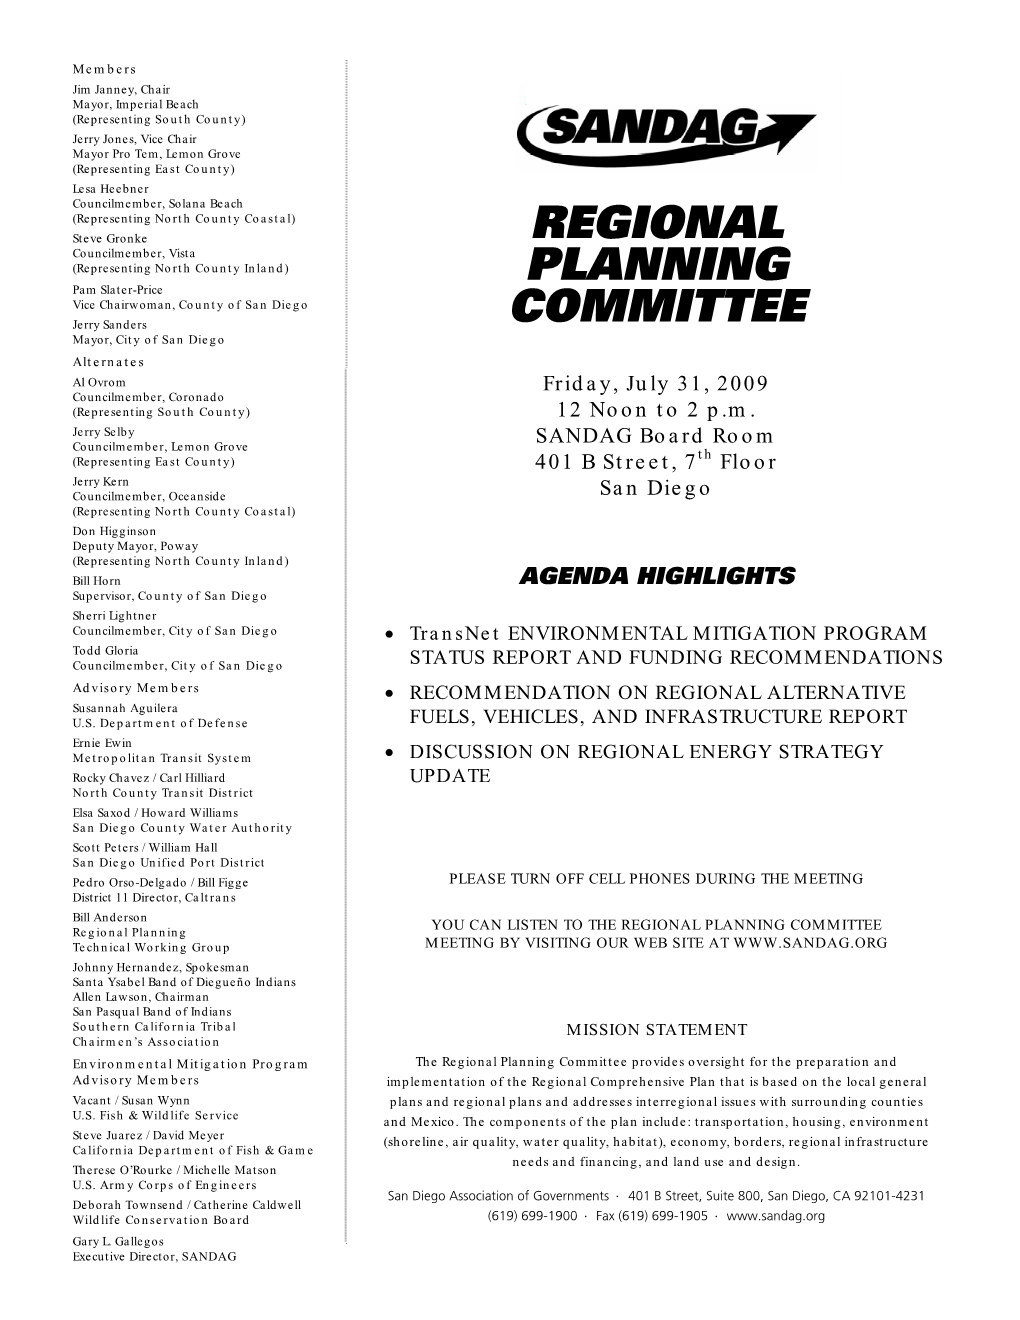 Regional Planning Committee Agenda